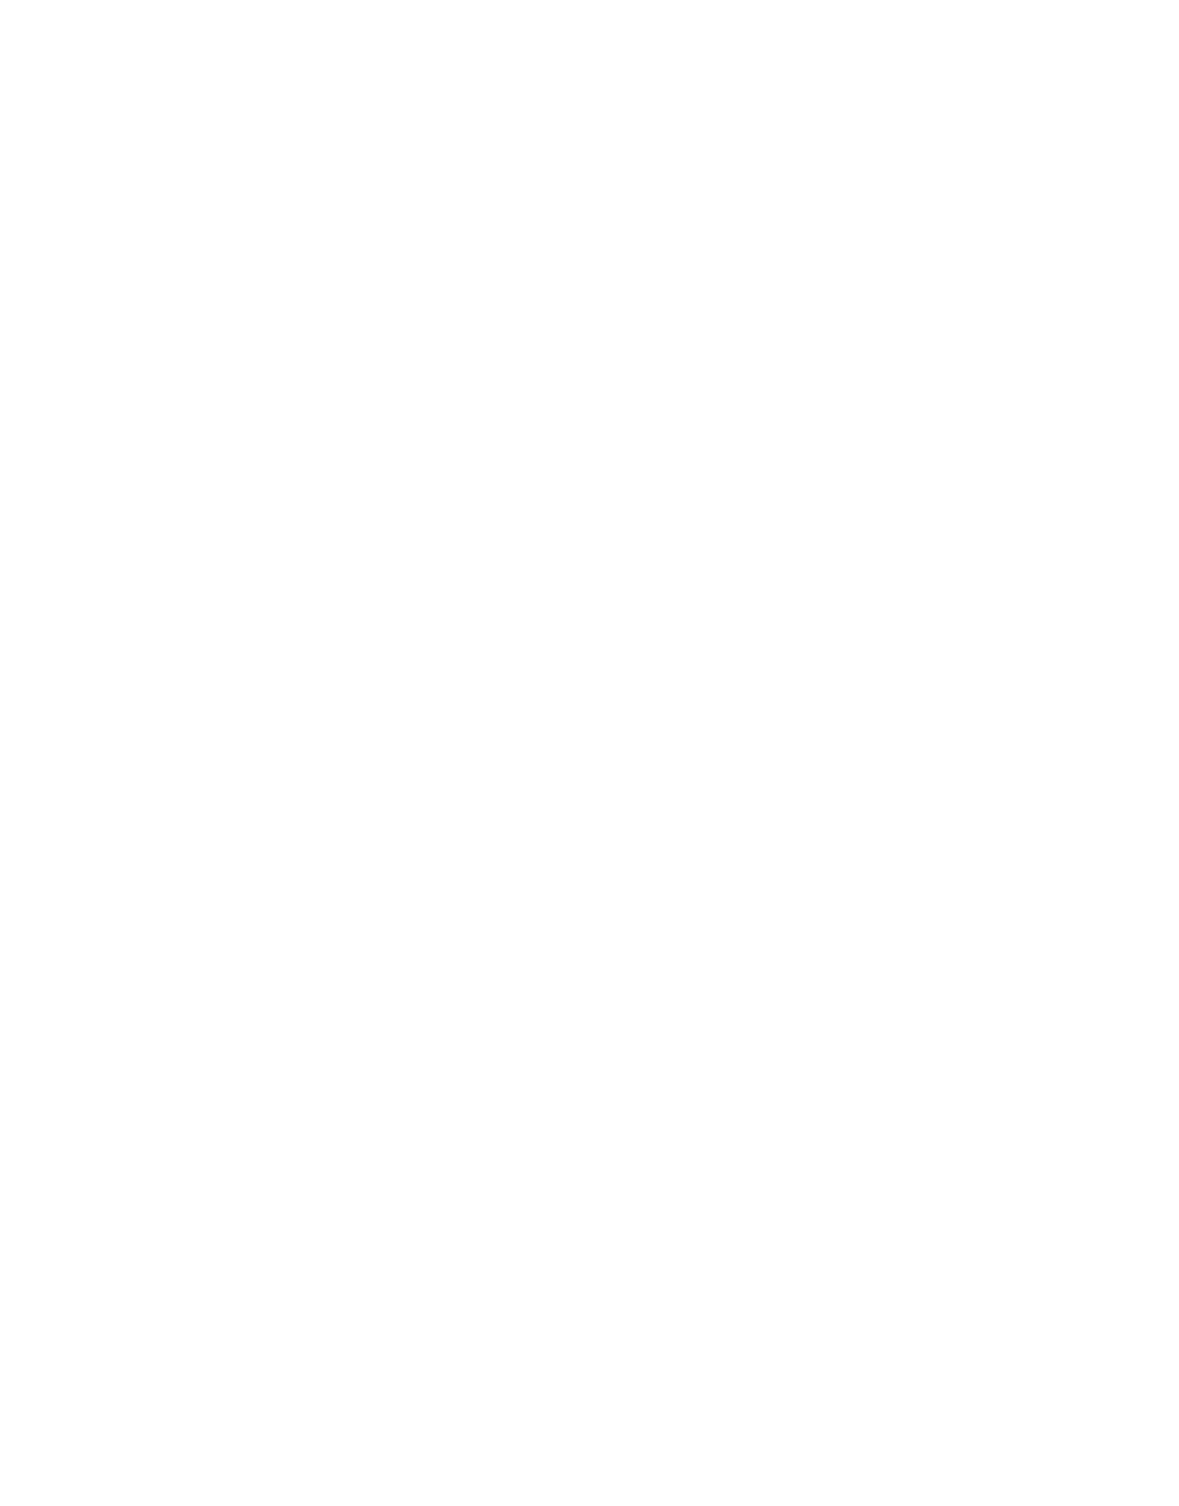 Playstudios logo for dark backgrounds (transparent PNG)